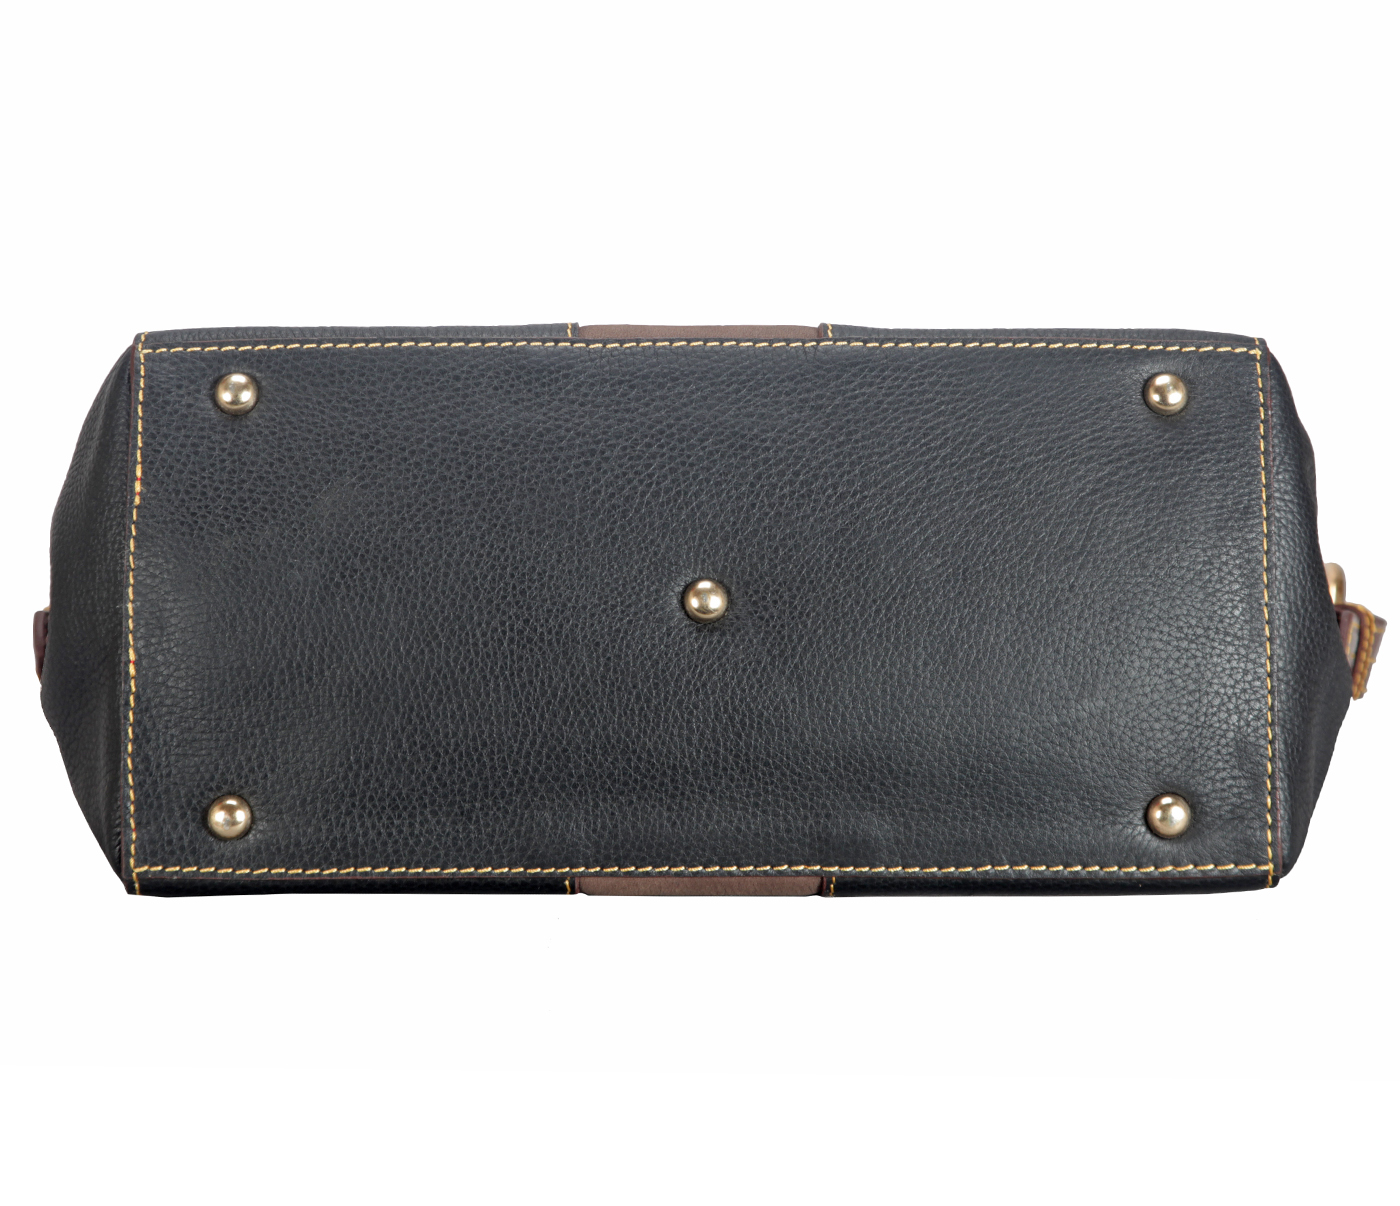 B835-Gretta-Short handle cum Sling bag in Genuine Leather - Black